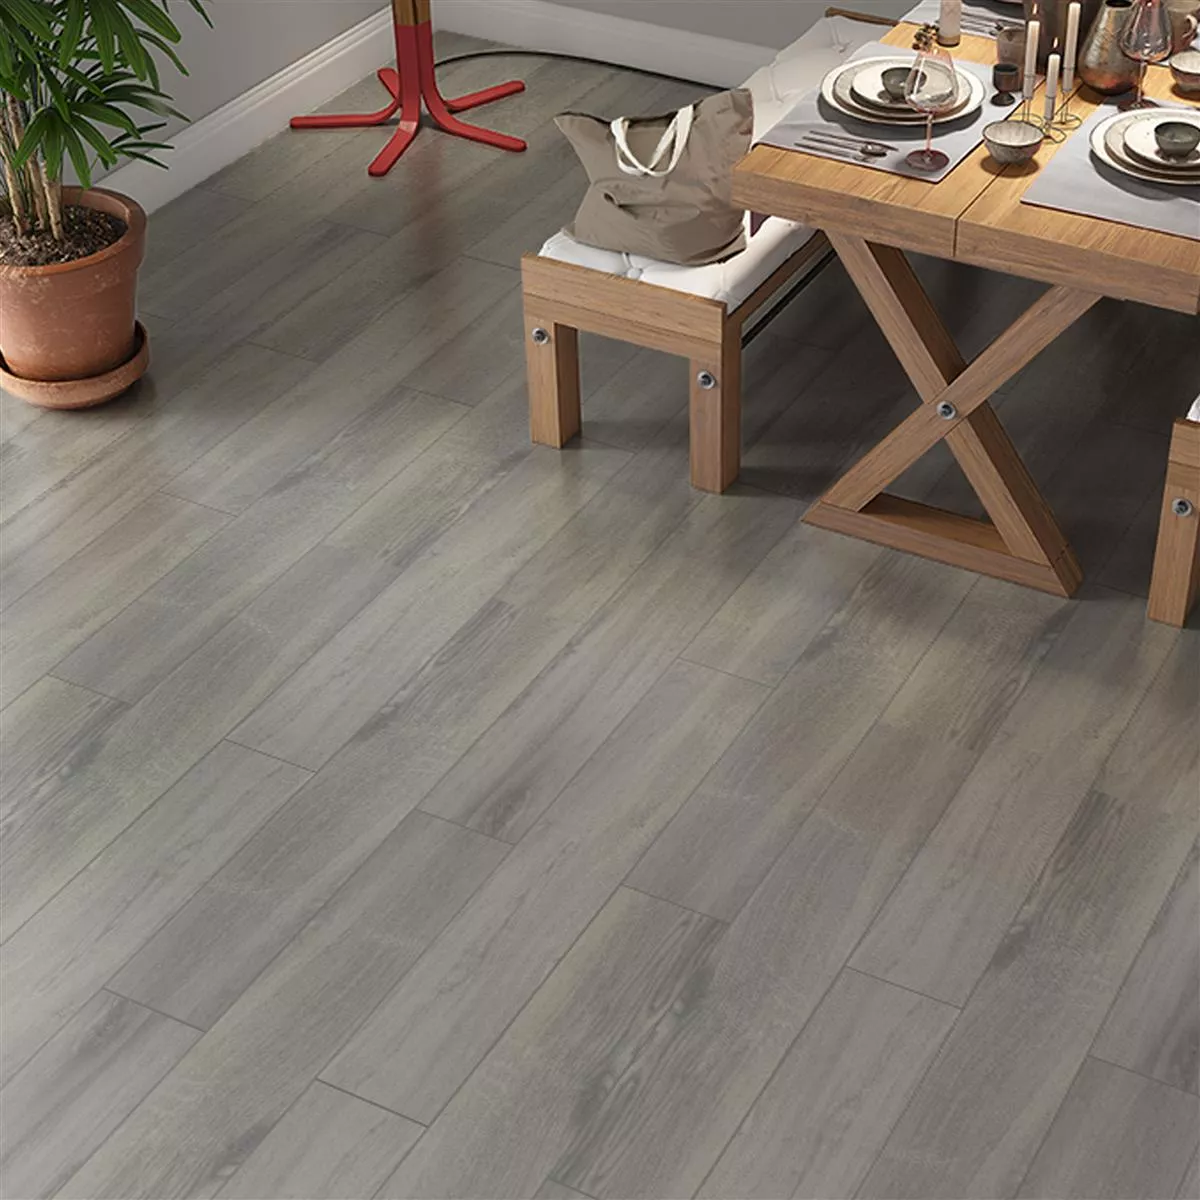 Sample Floor Tiles Wood Optic Fullwood Beige 20x120cm 